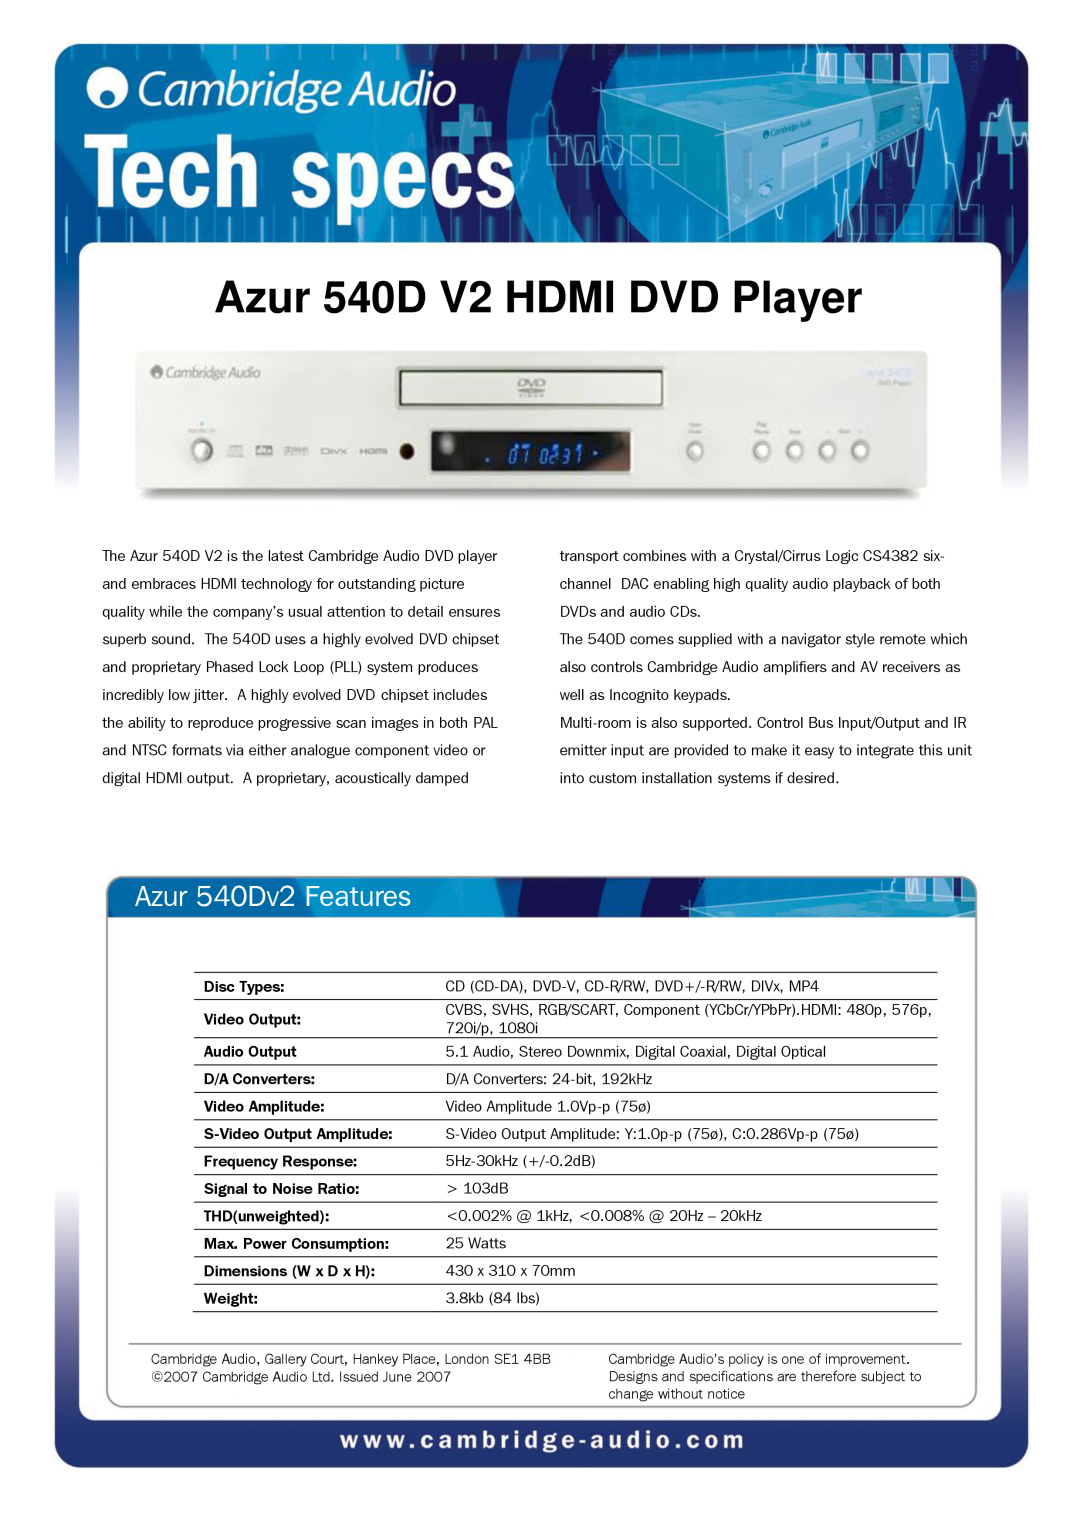 Cambridge Audio dimensions Azur 540D V2 HDMI DVD Player, Azur 540Dv2 Features 